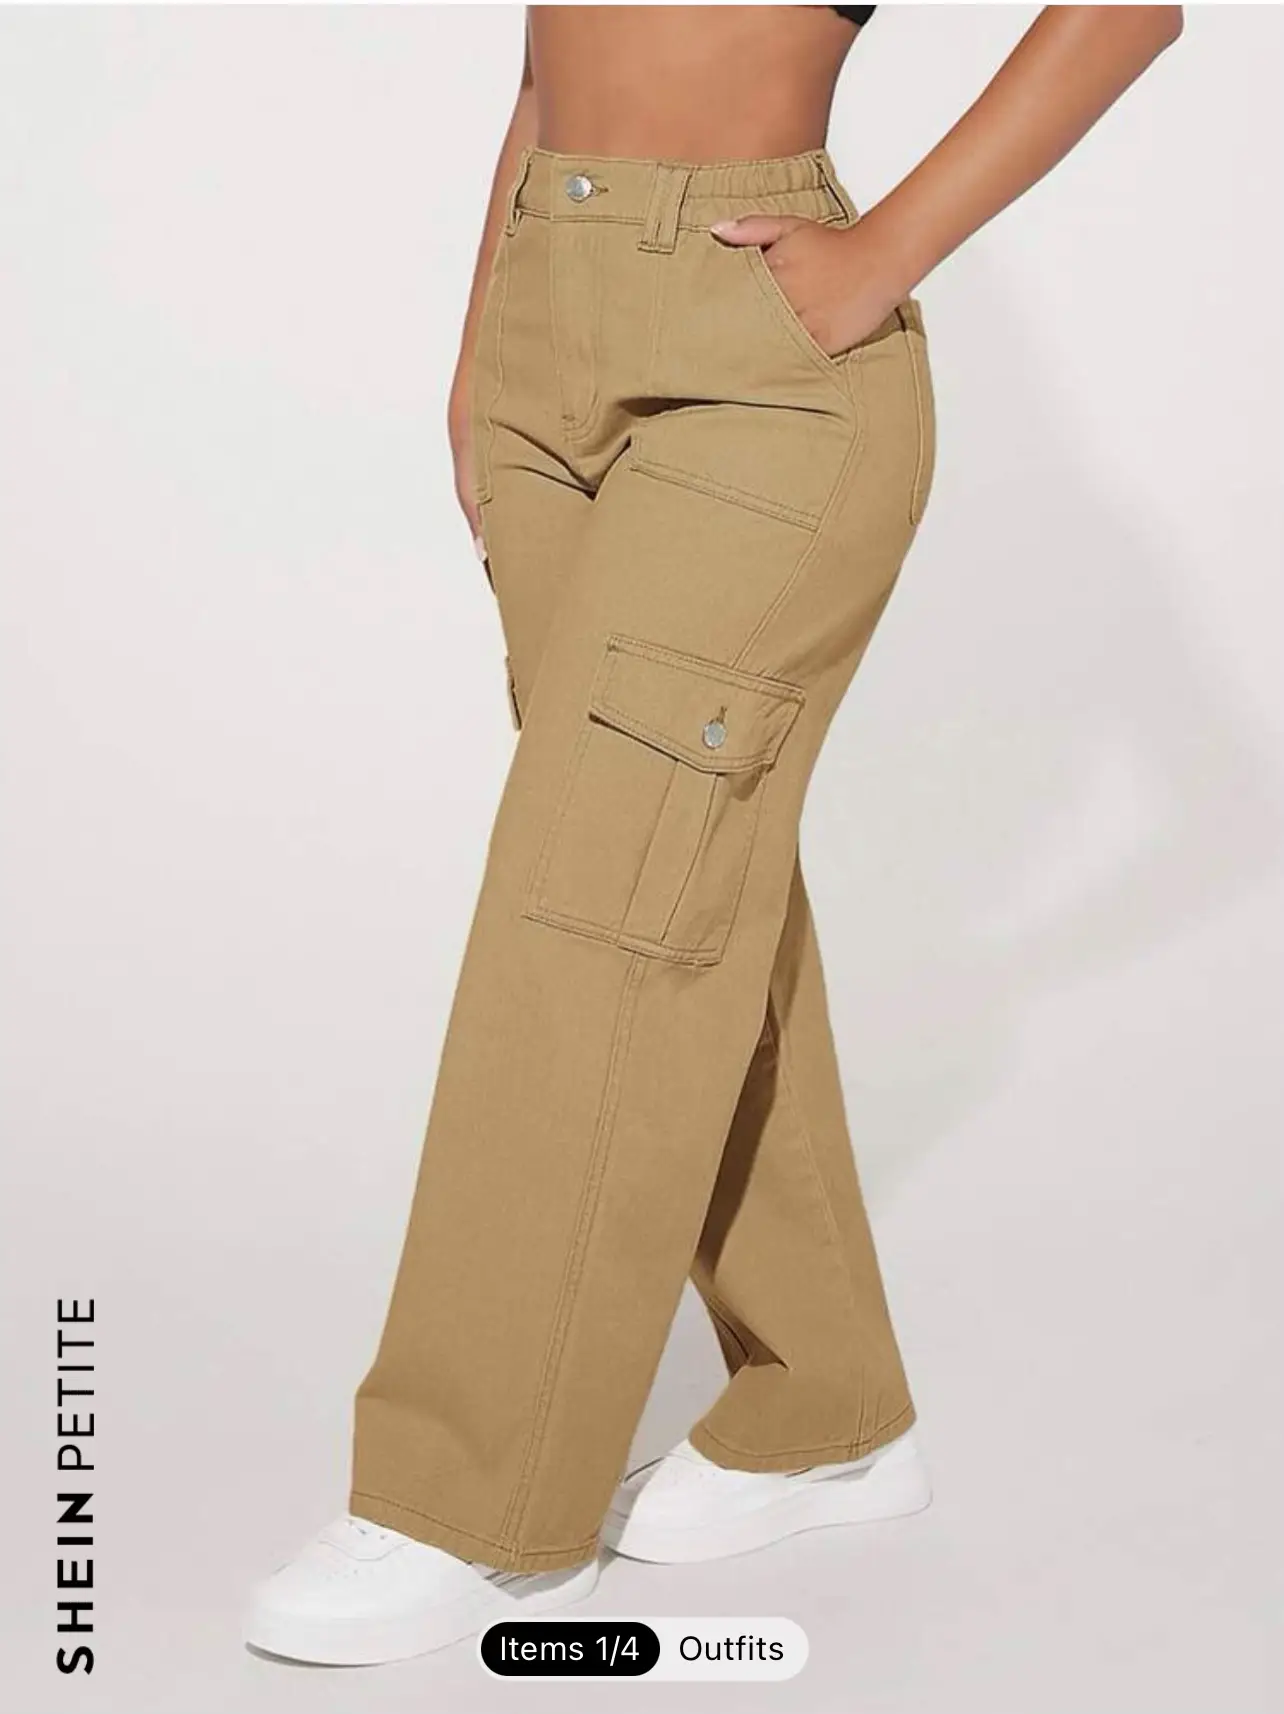 SHEIN Brasil  Pants for women, Cargo pants women, Cargo pants outfit